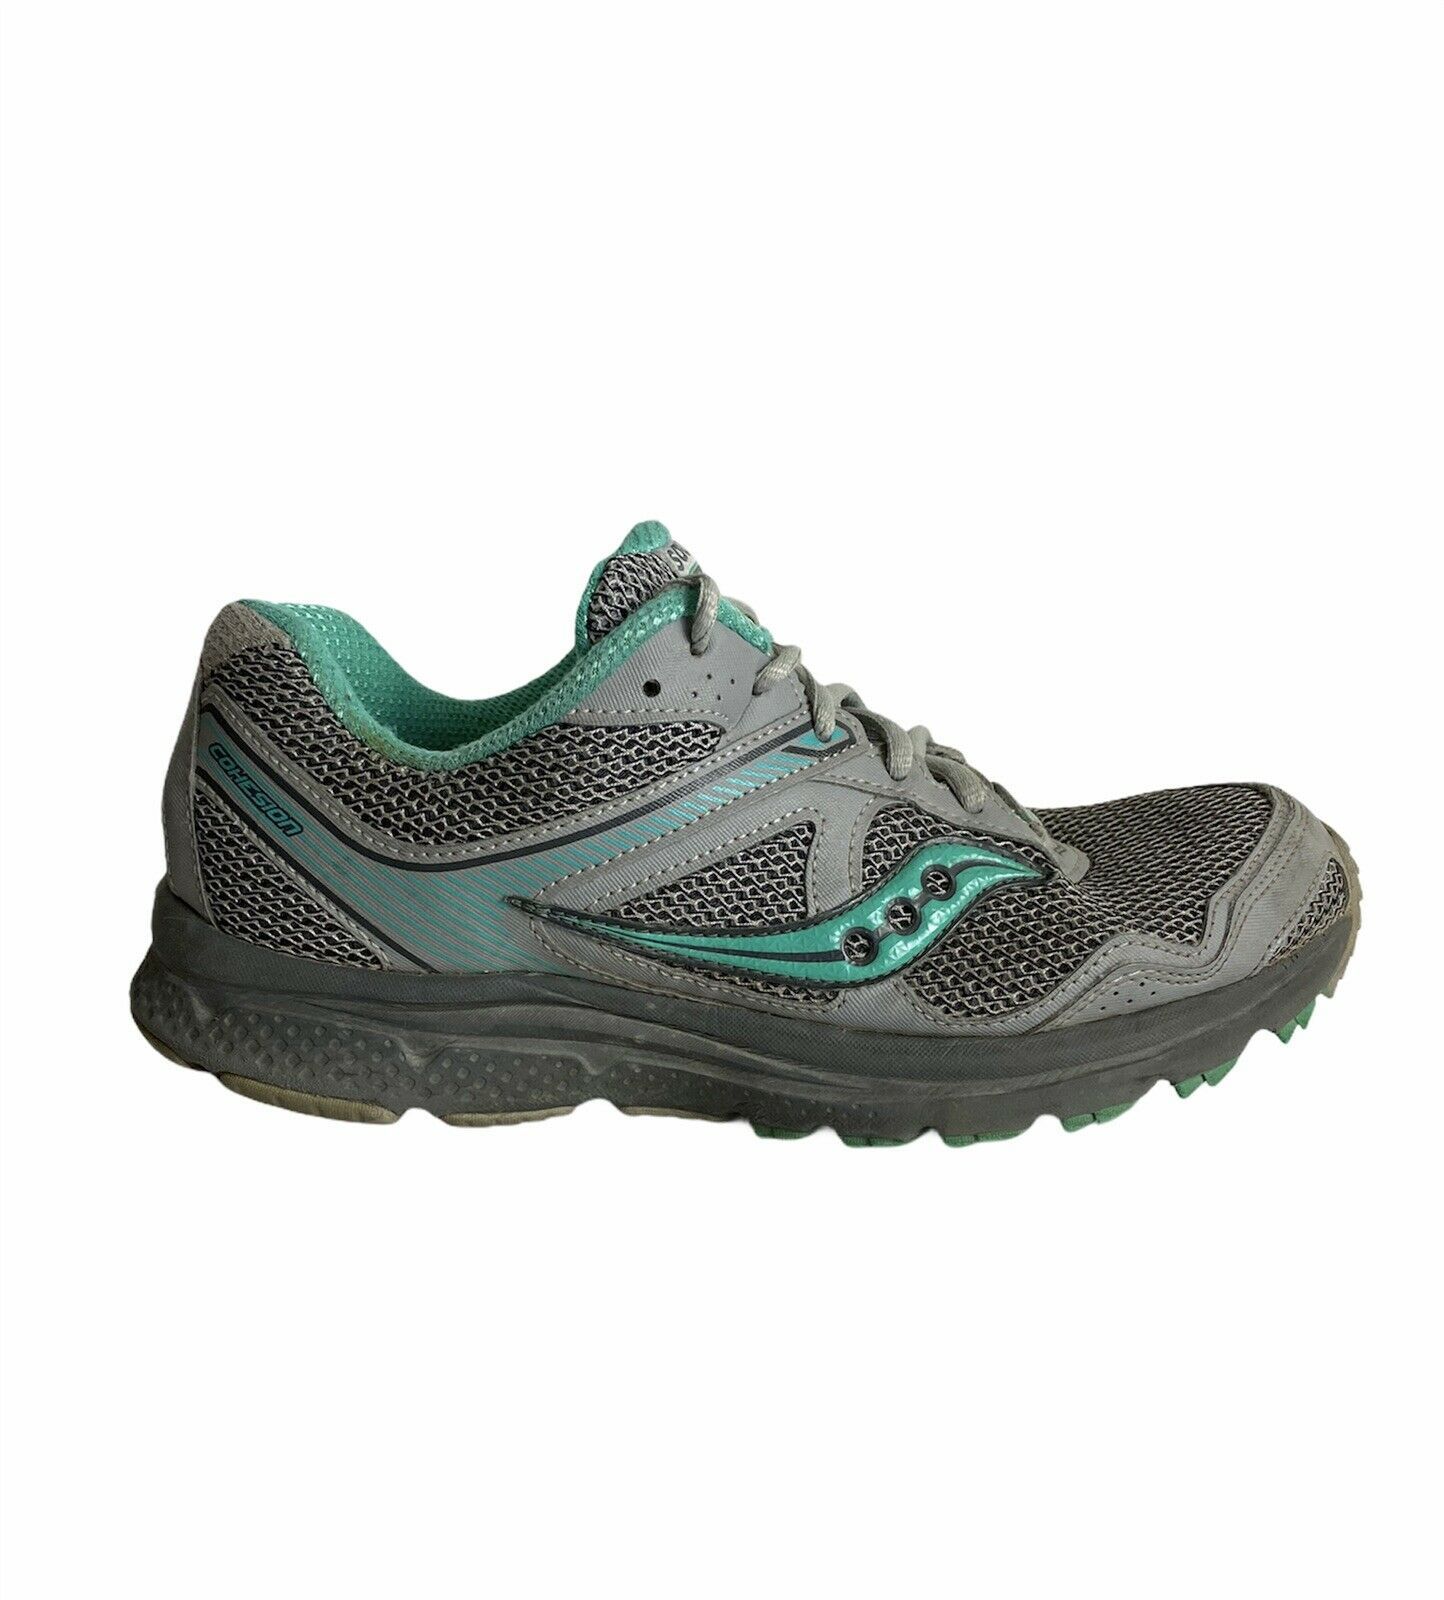 EU 37 Women's Running Shoes S60445-6 B Saucony Jazz Original Size US 6 M